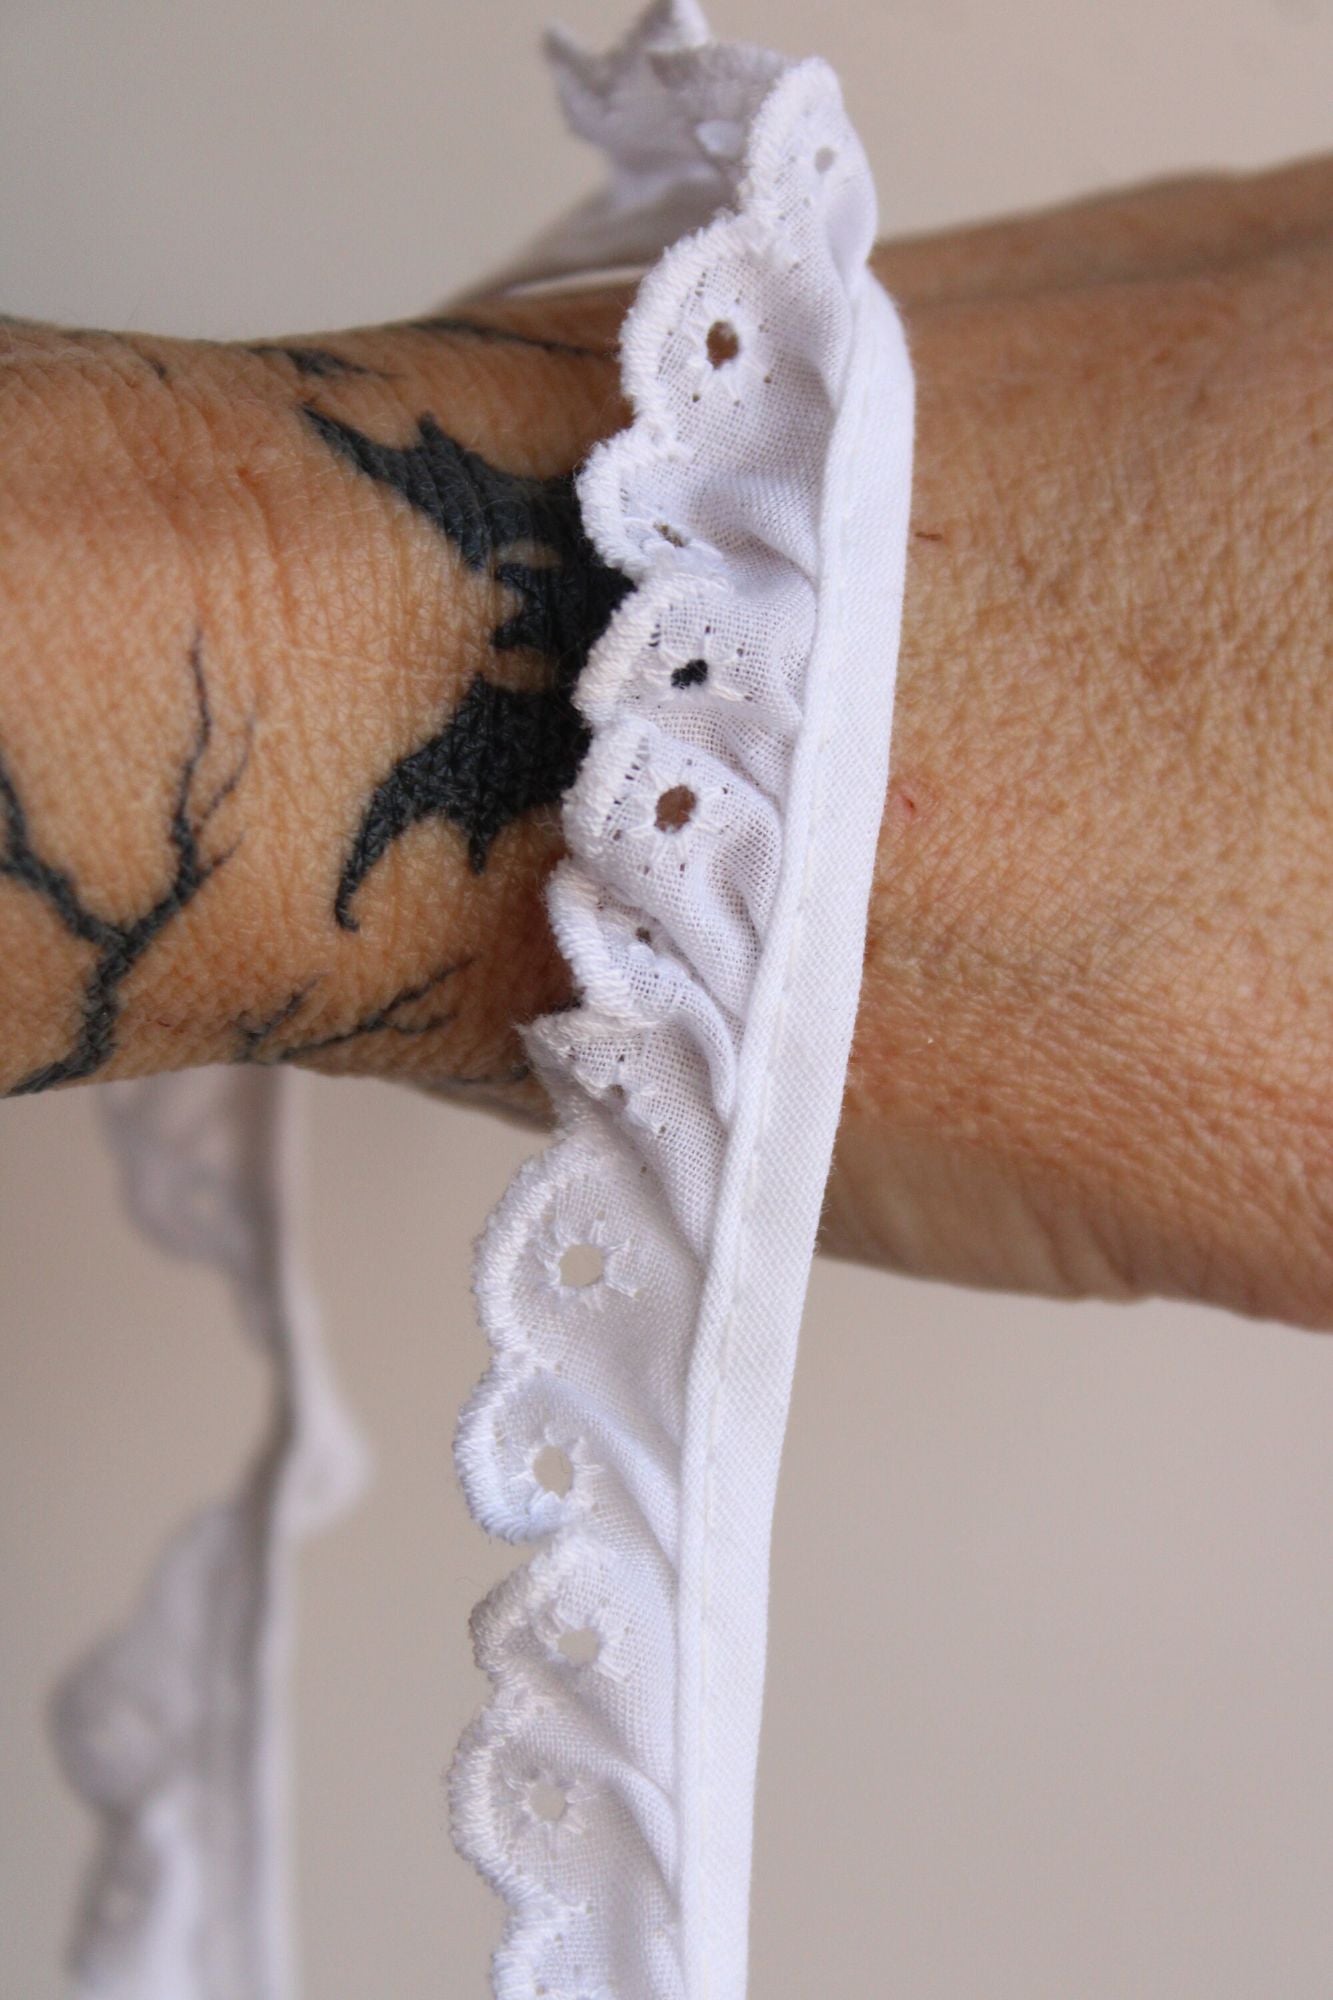 Vintage White Trim, Eyelet Ruffled Lace, 2 Yards  .75" wide / Sewing or Crafting Embellishment